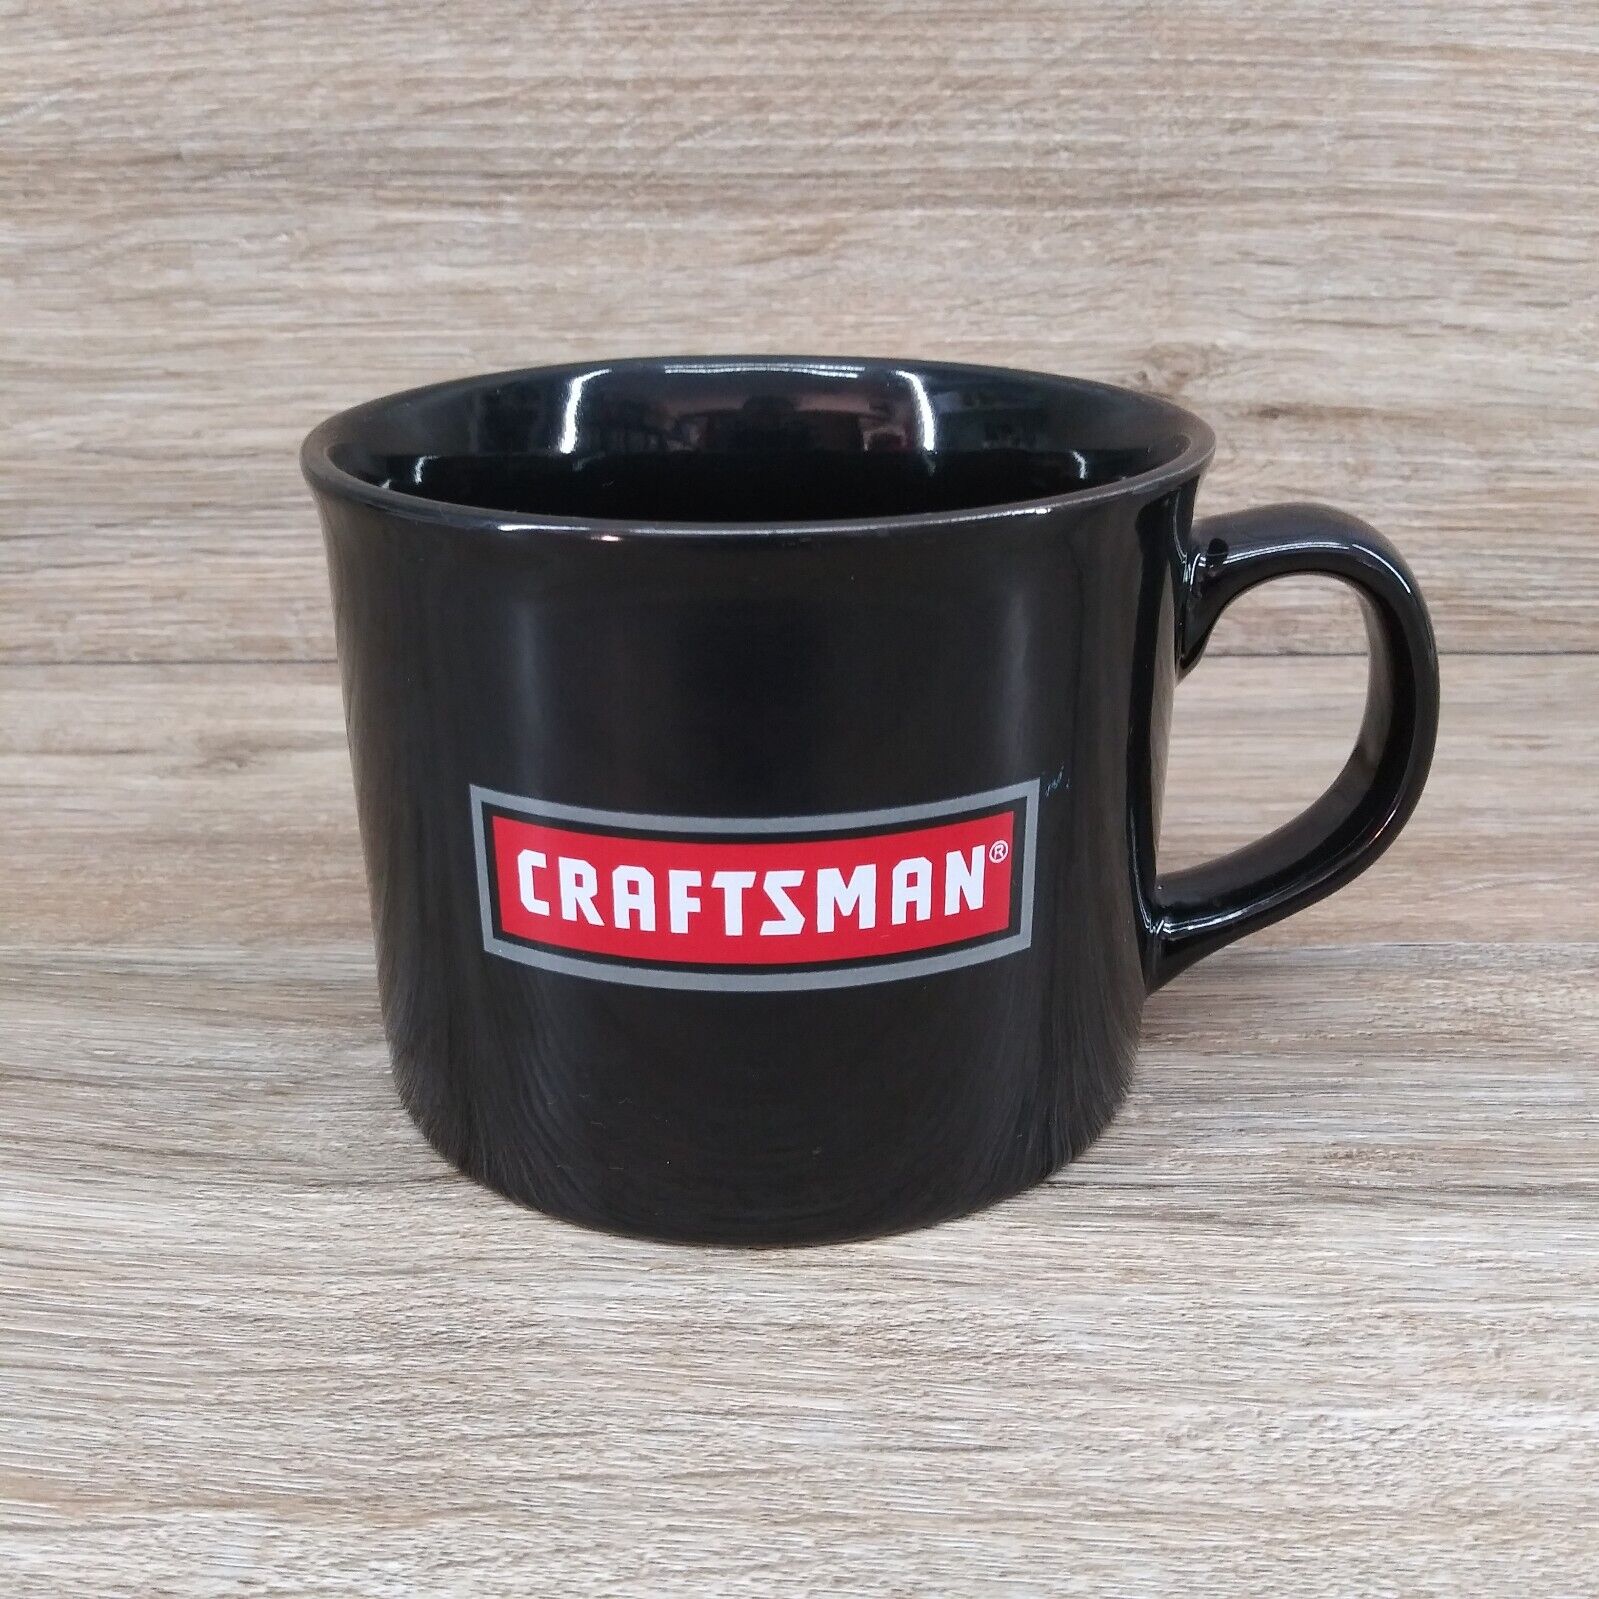 Craftsman Coffee Mug Black Large Ceramic Soup Hot Cocoa Chili Cup